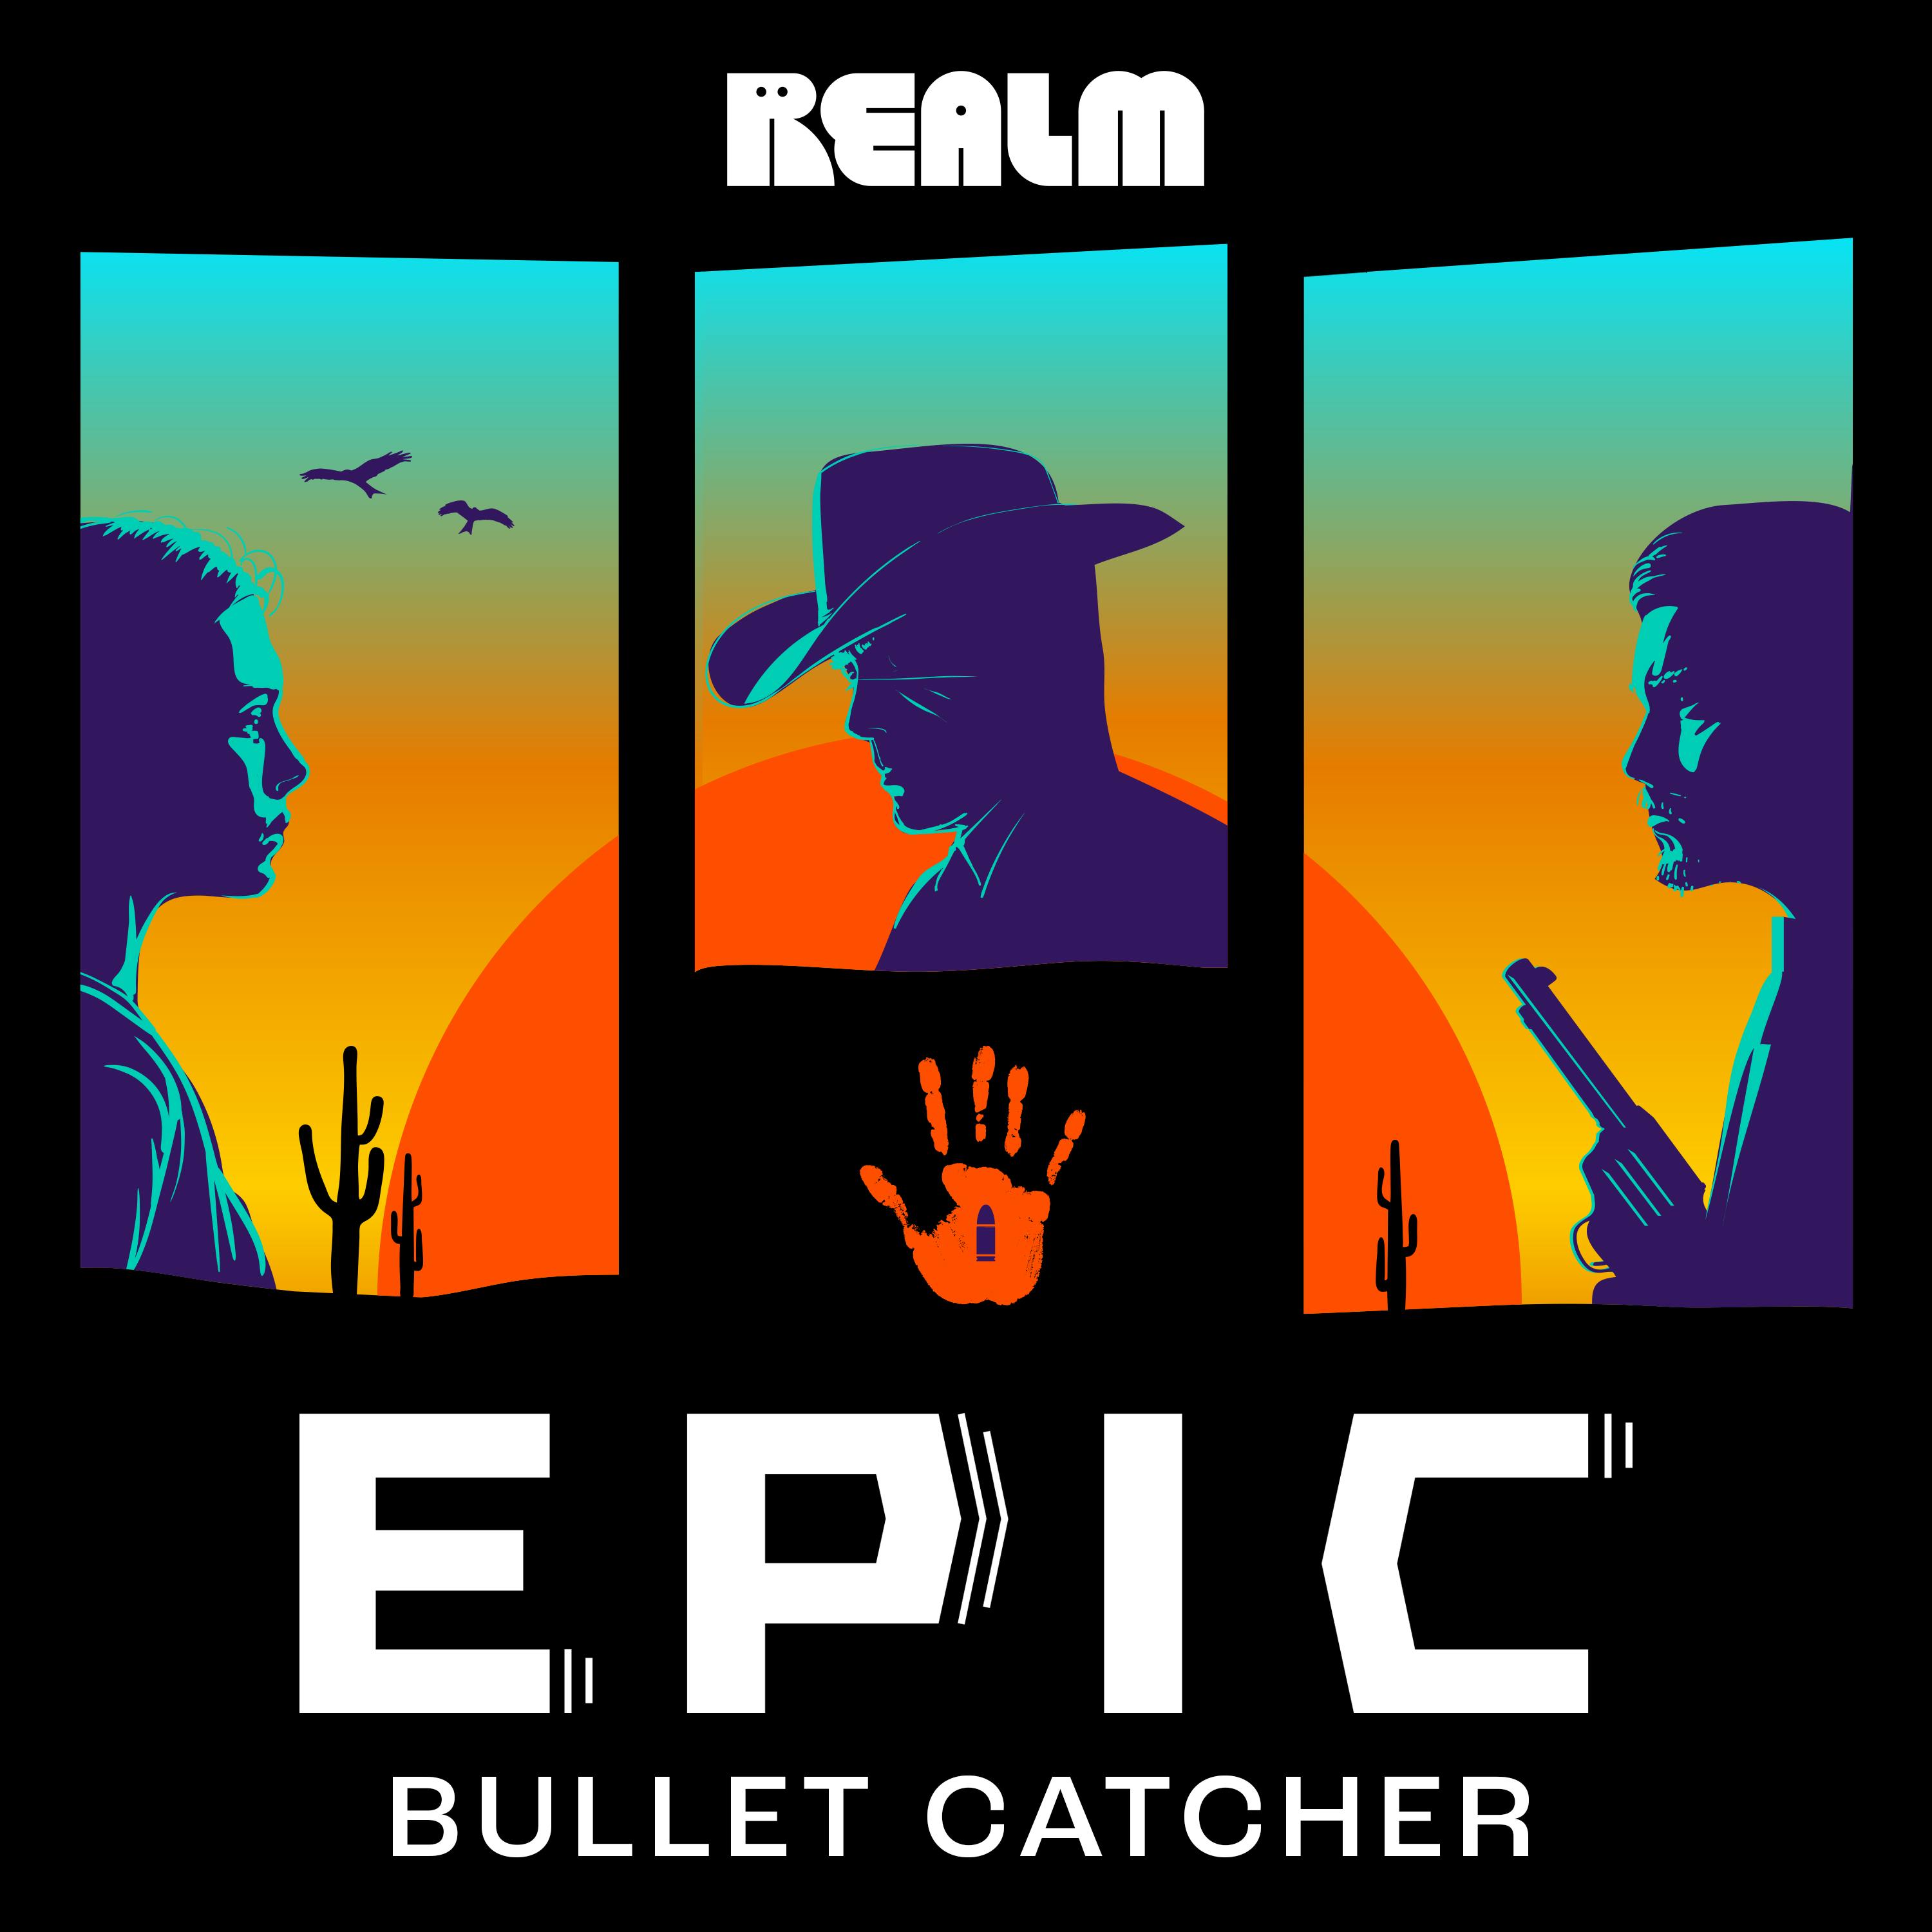 Introducing Epic: Bullet Catcher